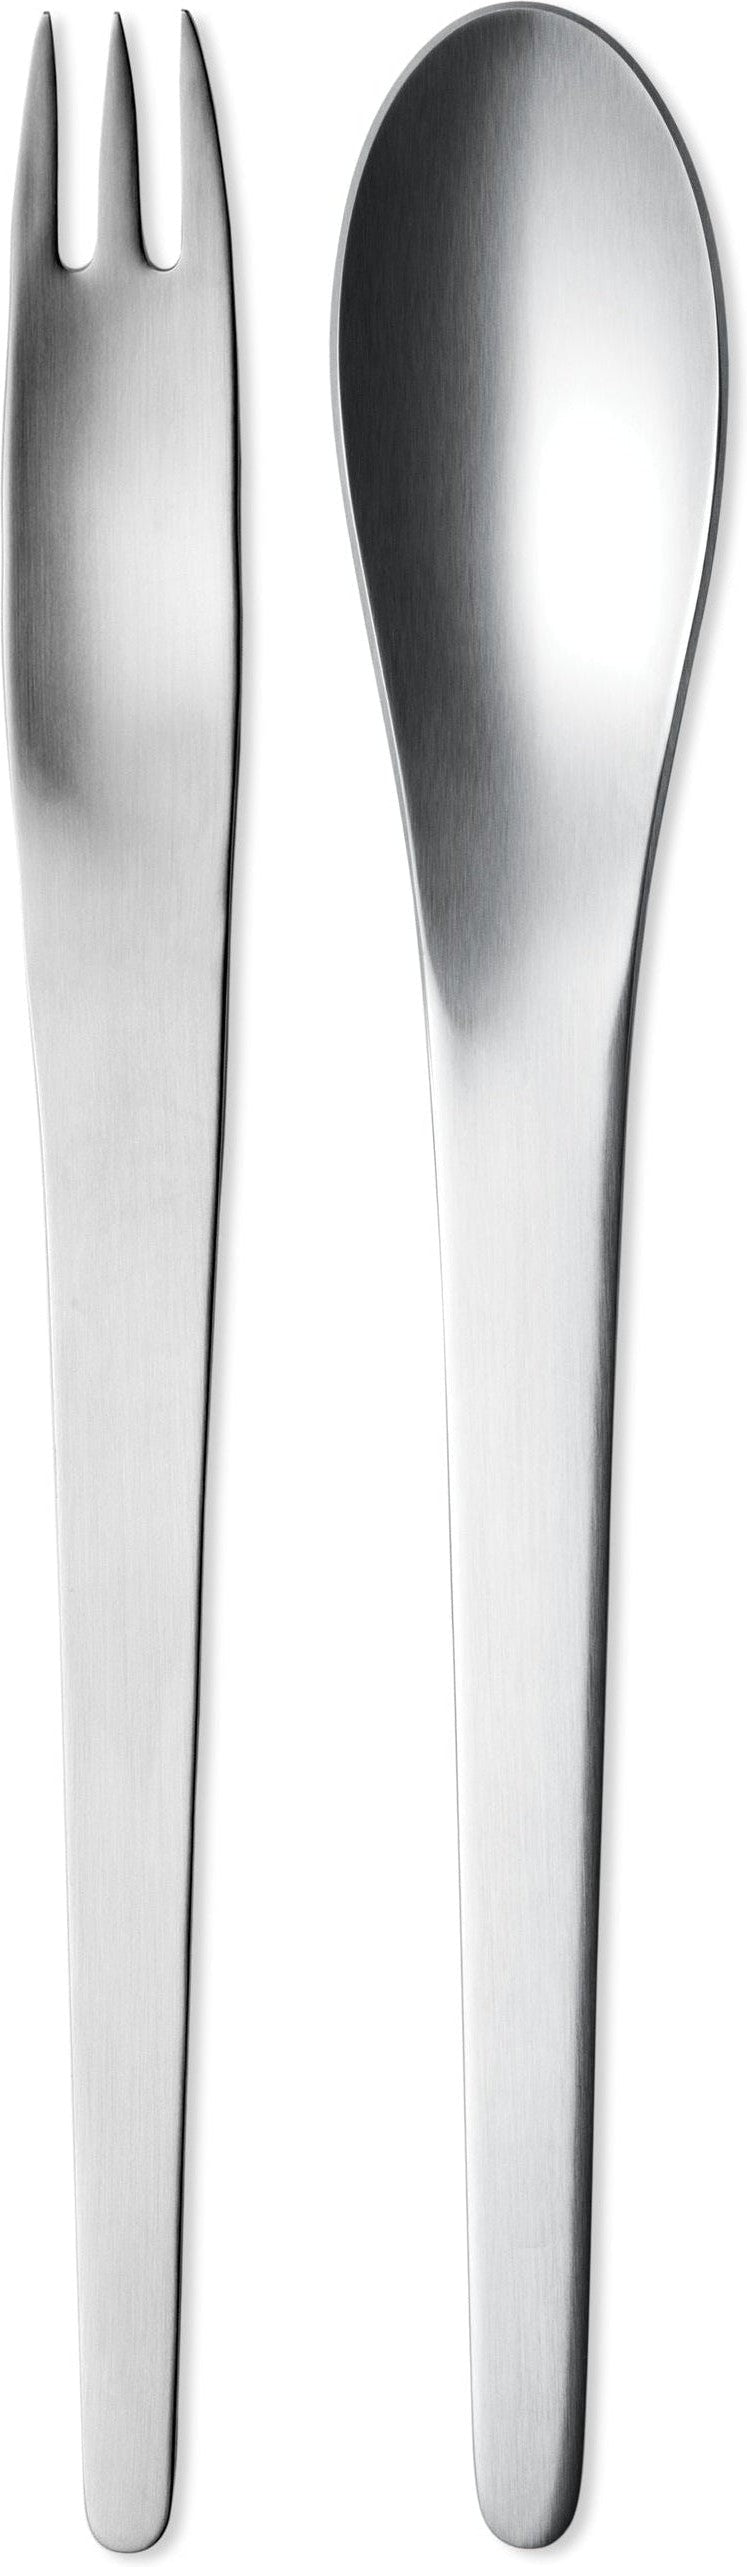 Georg Jensen Arne Jacobsen Serving Cutlery